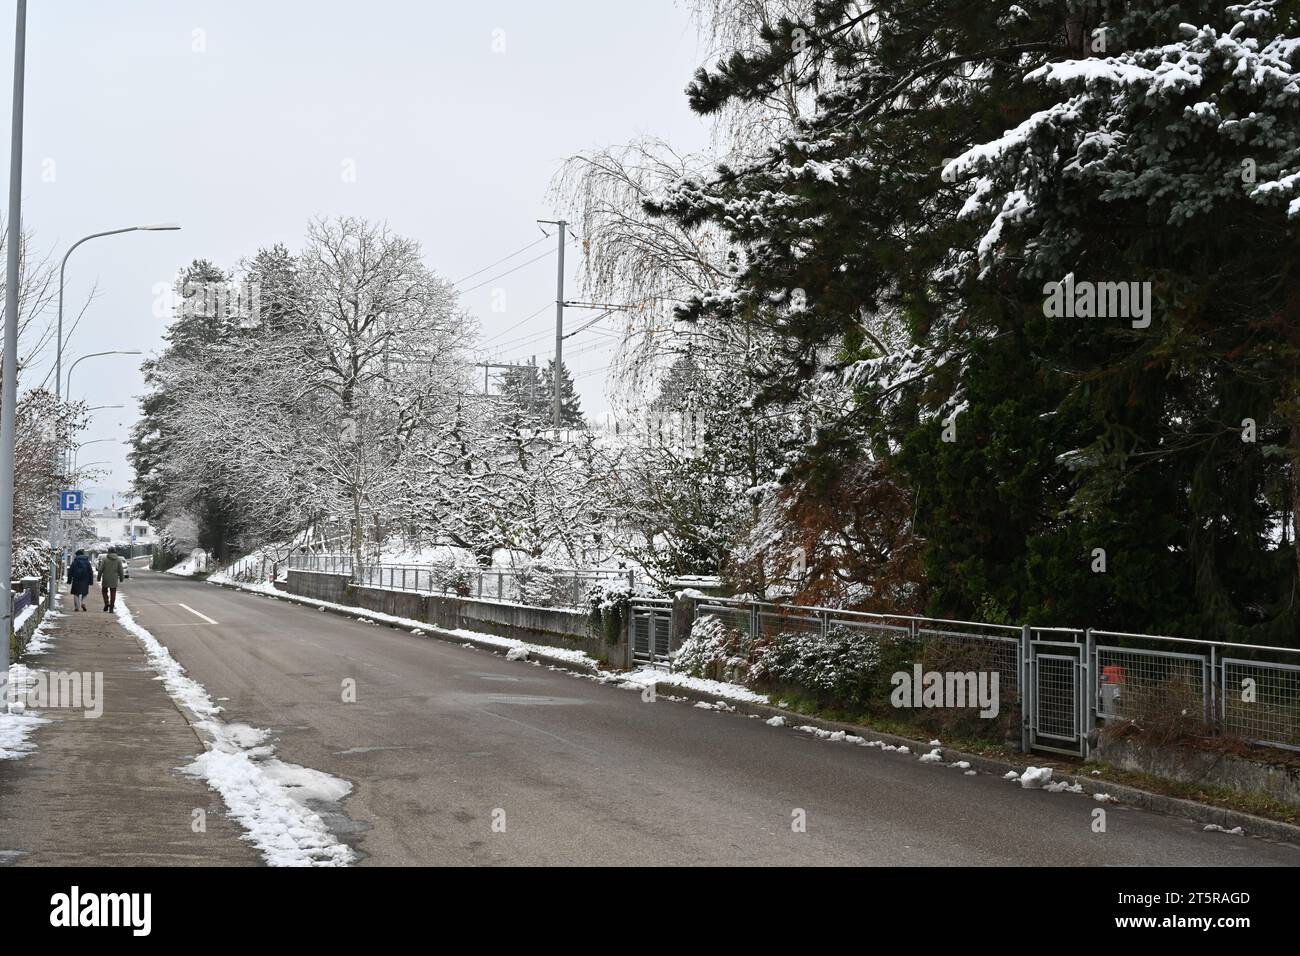 Street in residential quarter of village Urdorf in Switzerland in winter. Stock Photo